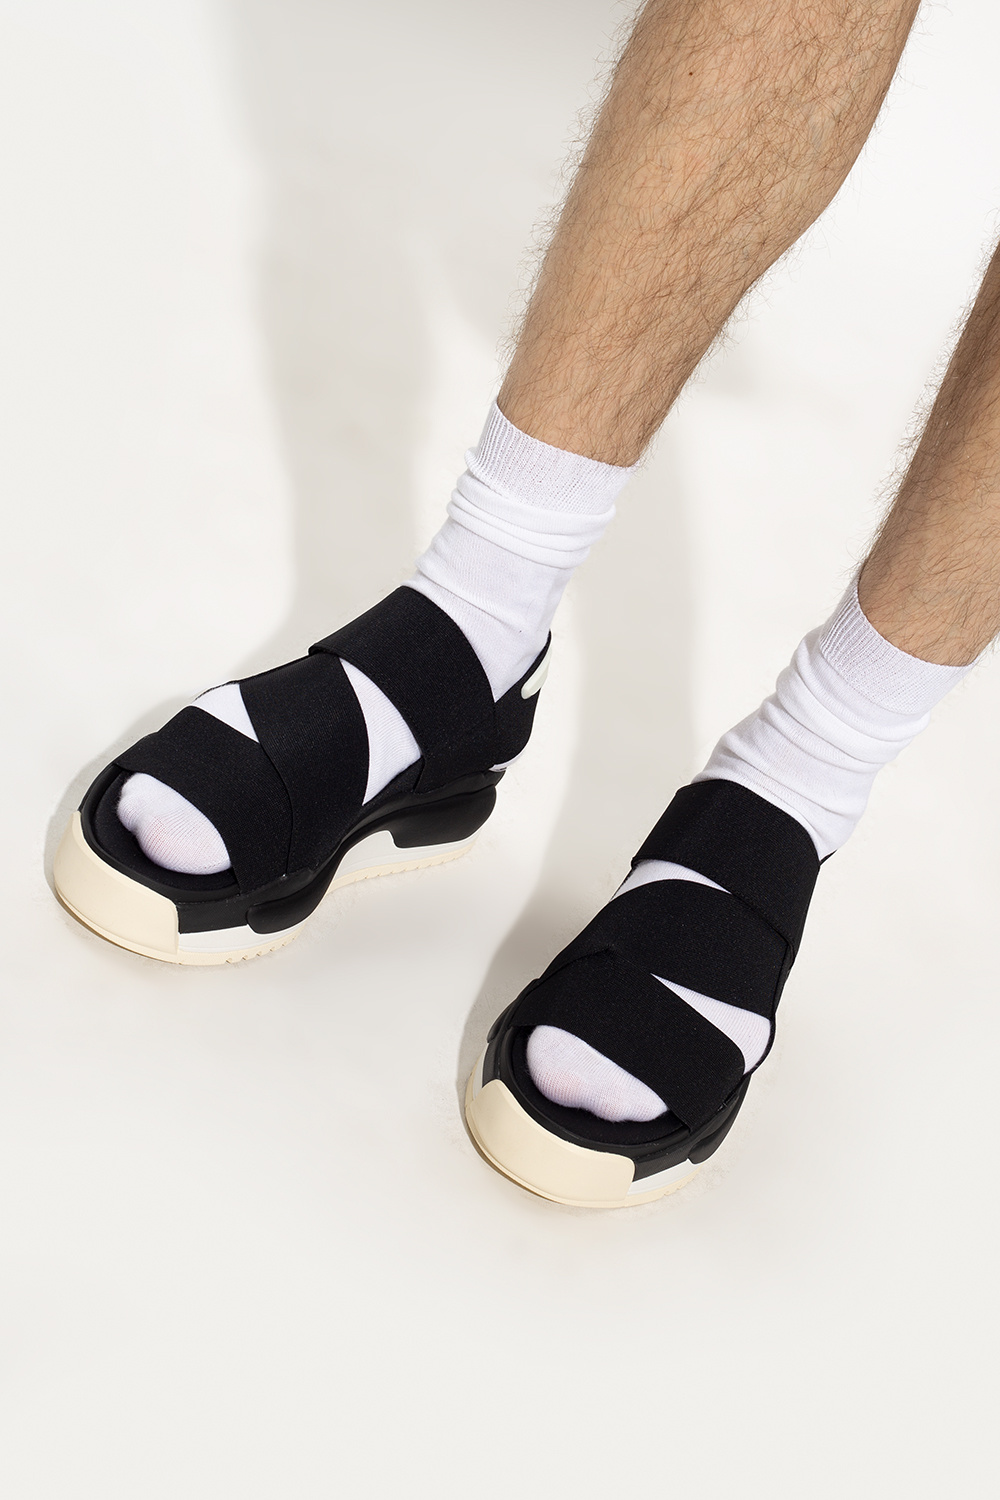 Y-3 Yohji Yamamoto 'Hokori' sandals | Men's Shoes | Vitkac